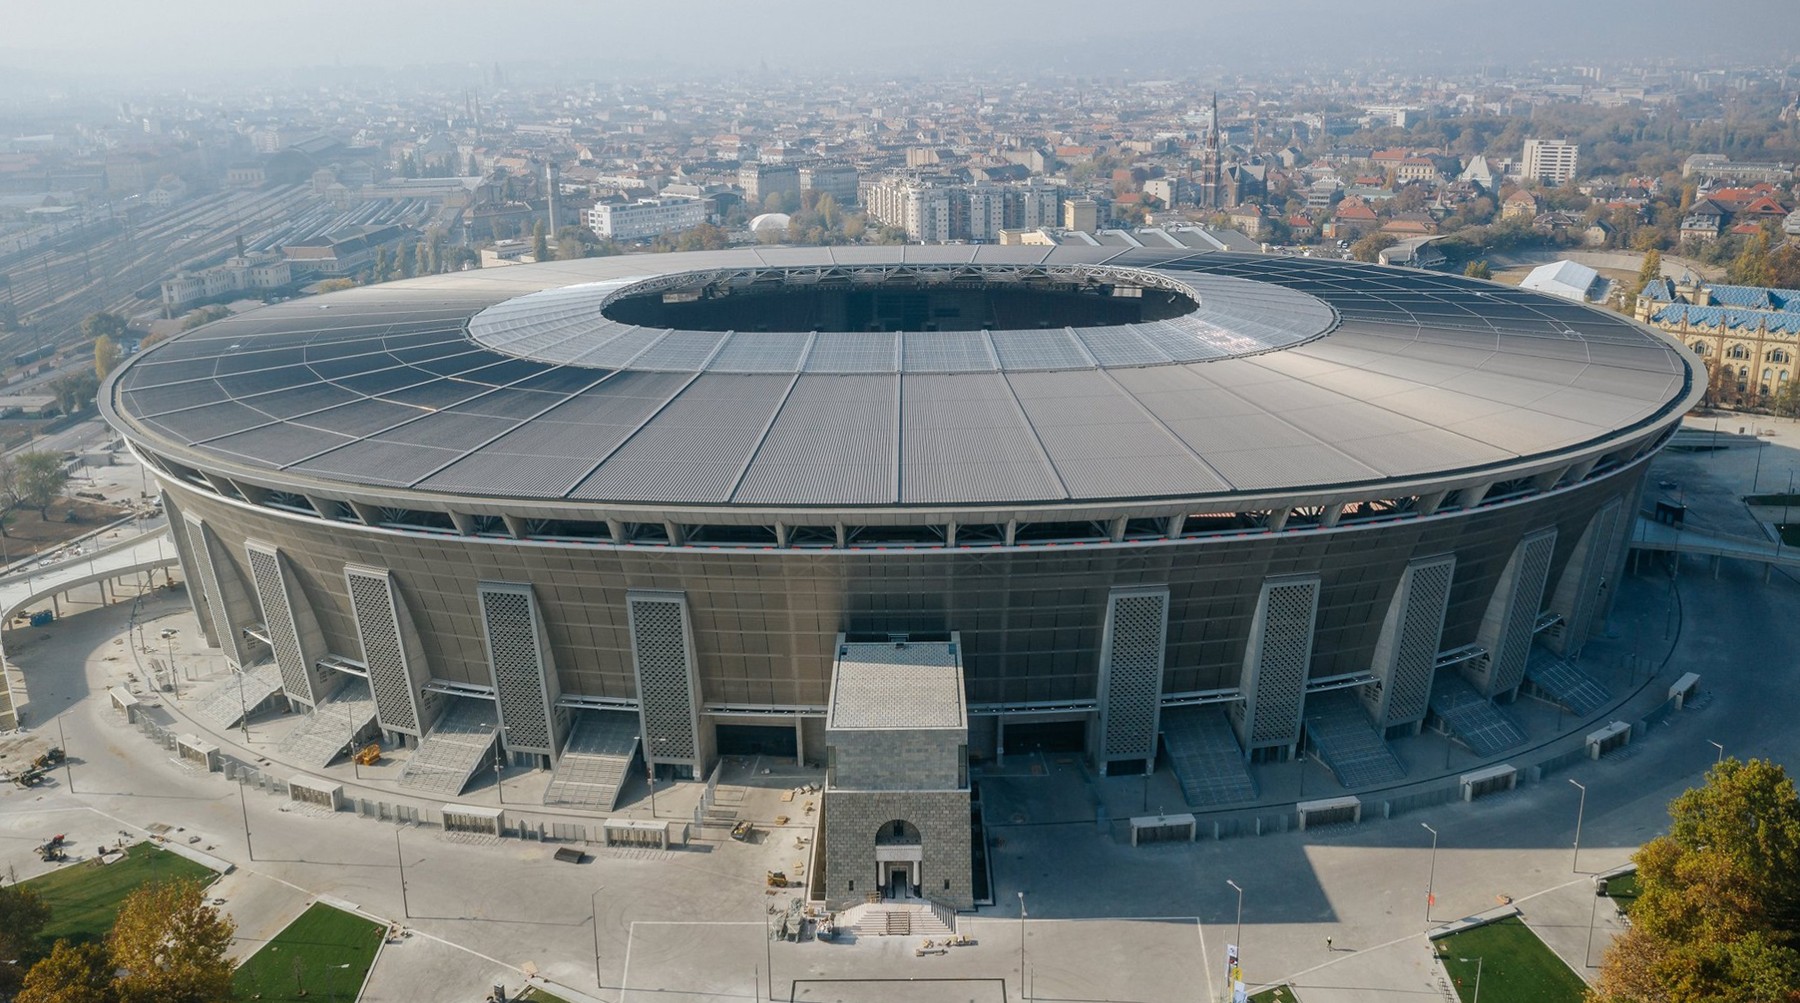 Stadion Ferenc Puskas / Puskas Arena